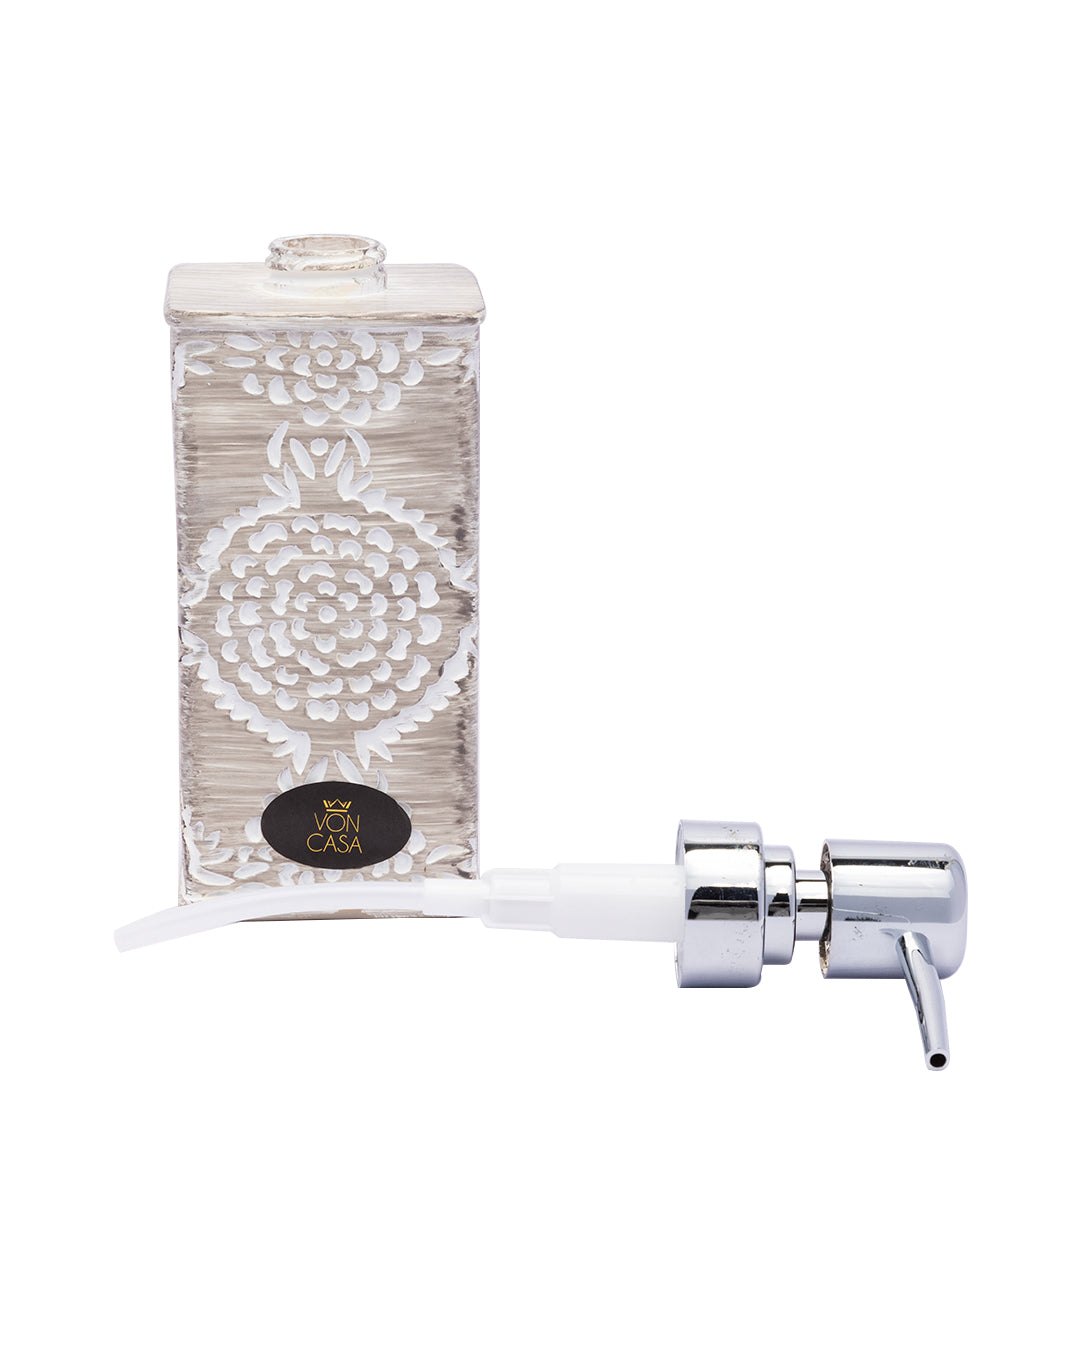 VON CASA Traditional Engraved Design Liquid Soap Dispenser- 300 mL